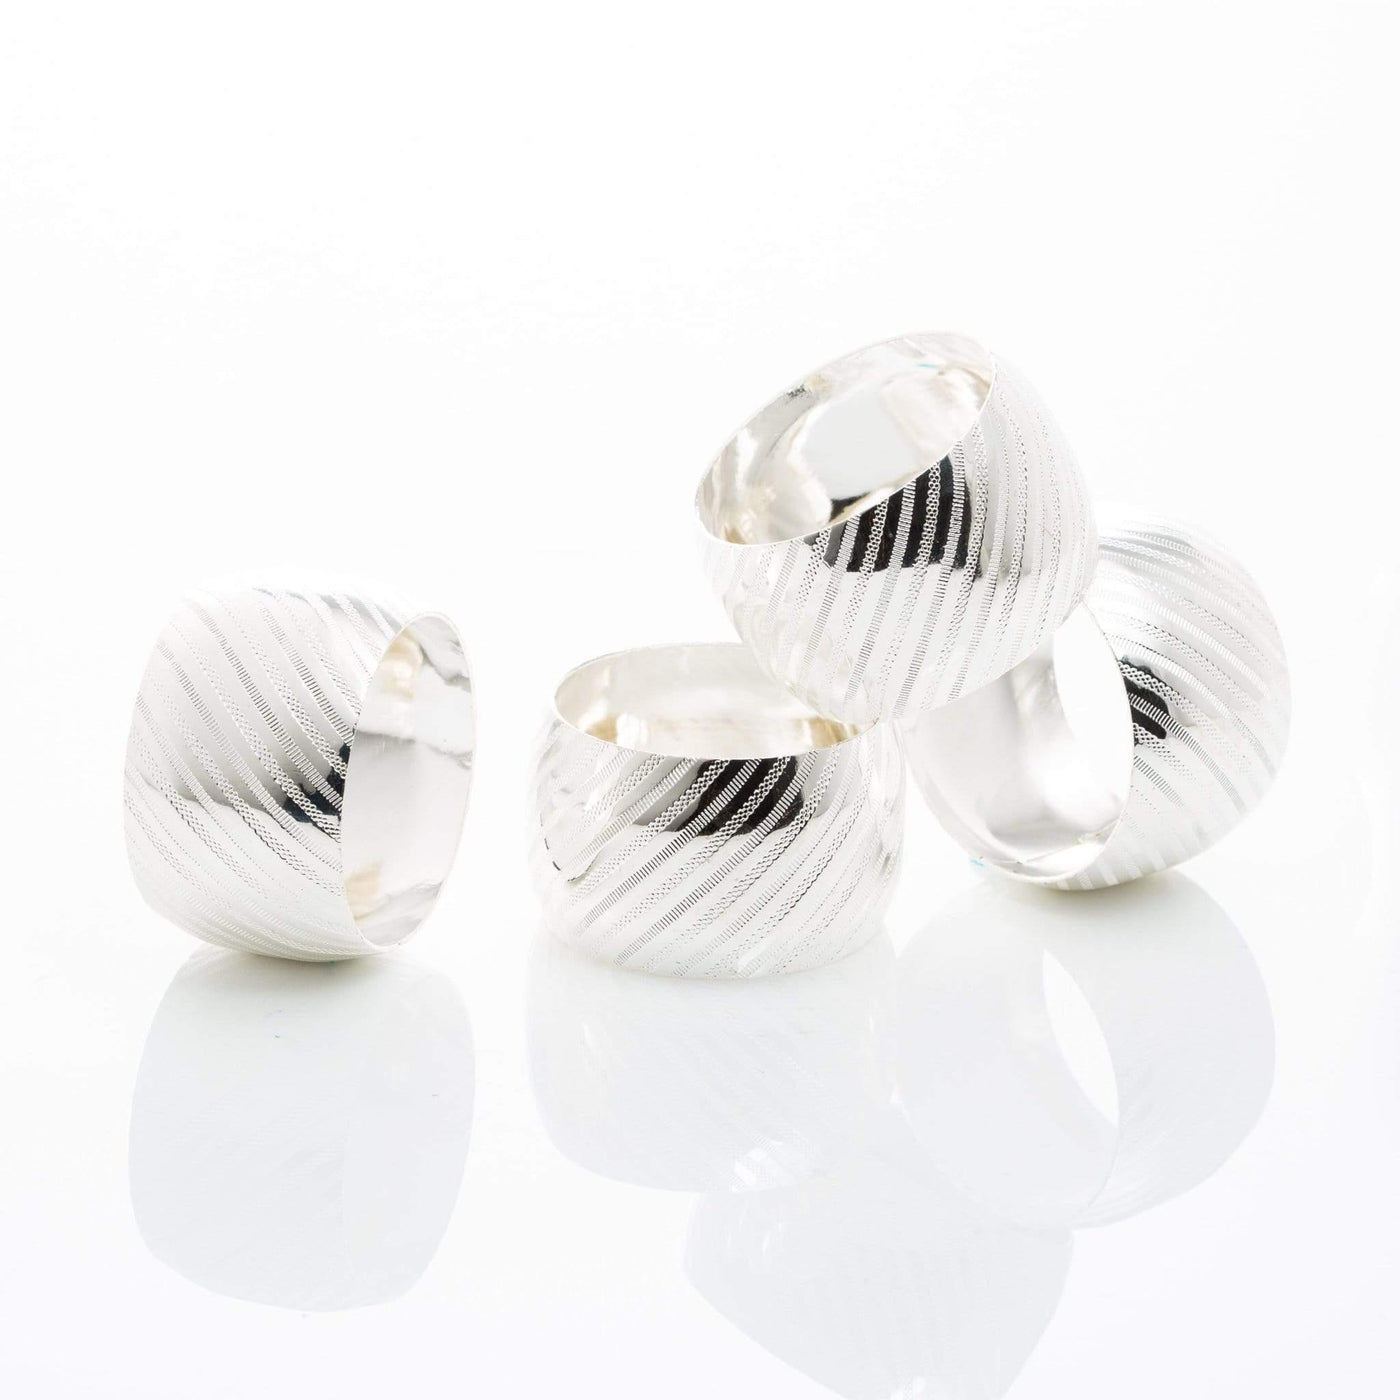 Silver Debossed Metal Napkin Rings | 4 Napkin Rings - Set With Style